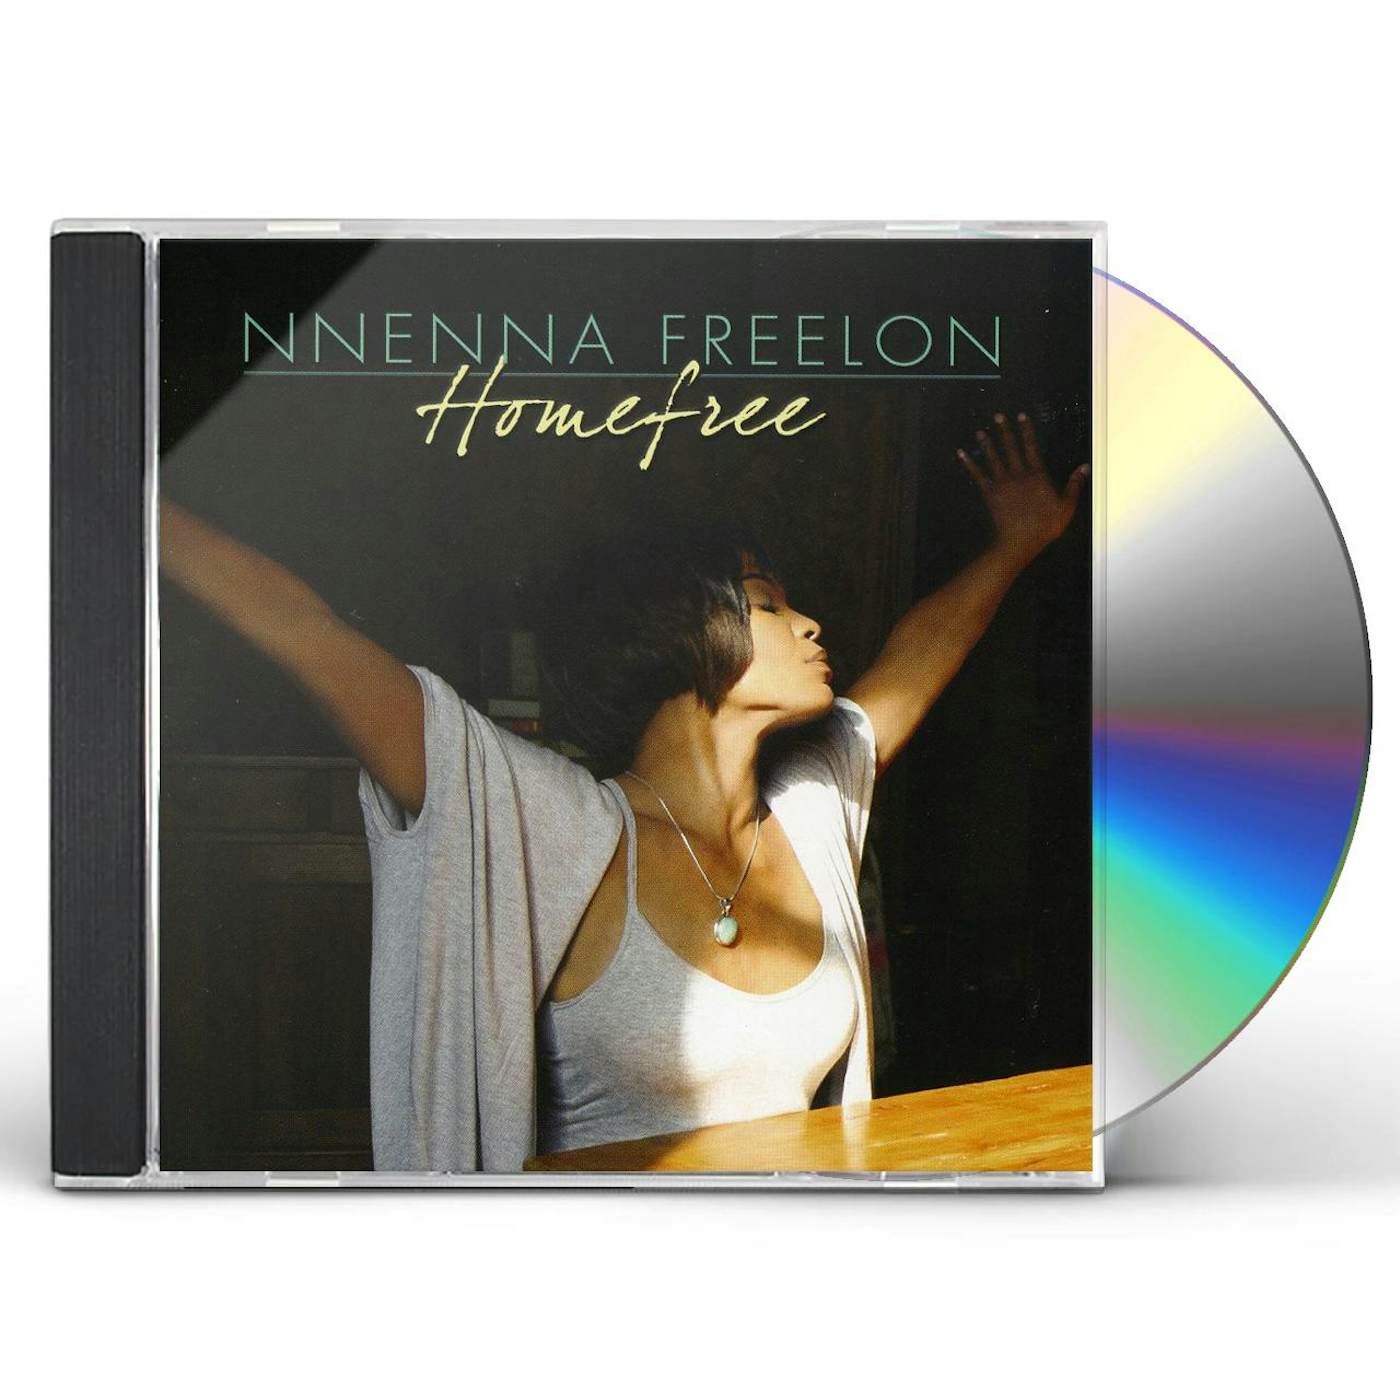 Nnenna Freelon HOMEFREE CD